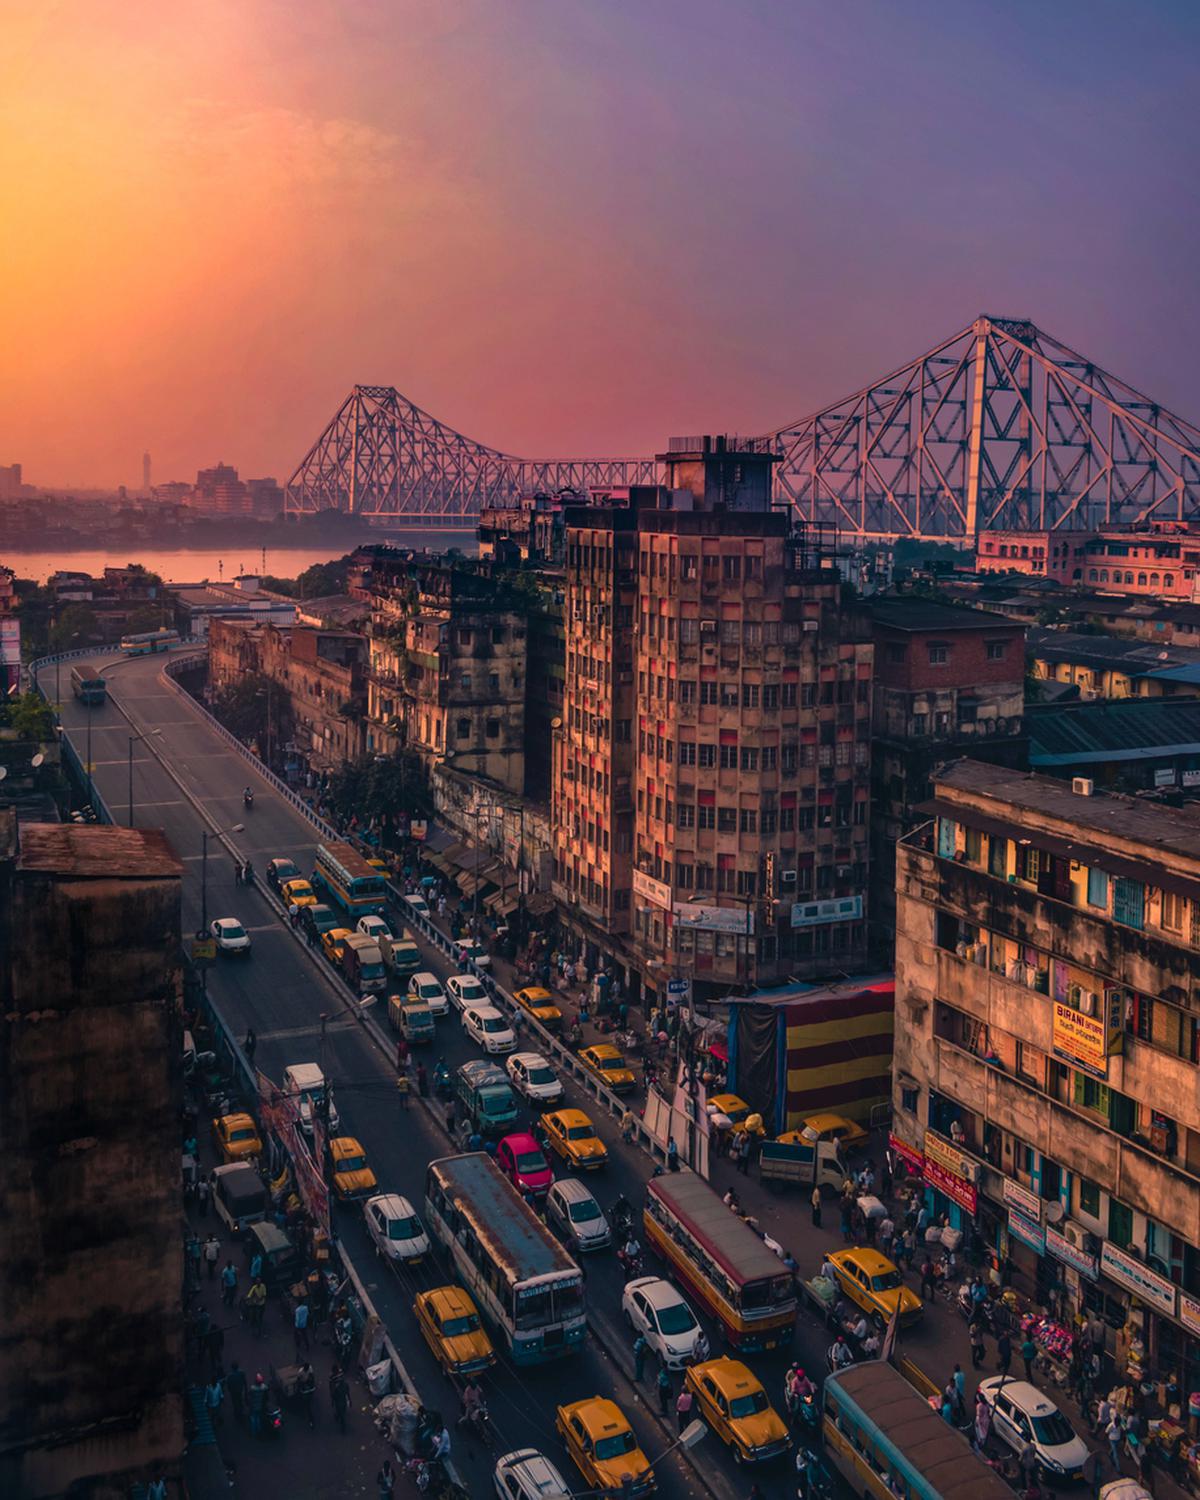 Kolkata at sundown with the Howrah Bridge in the background.